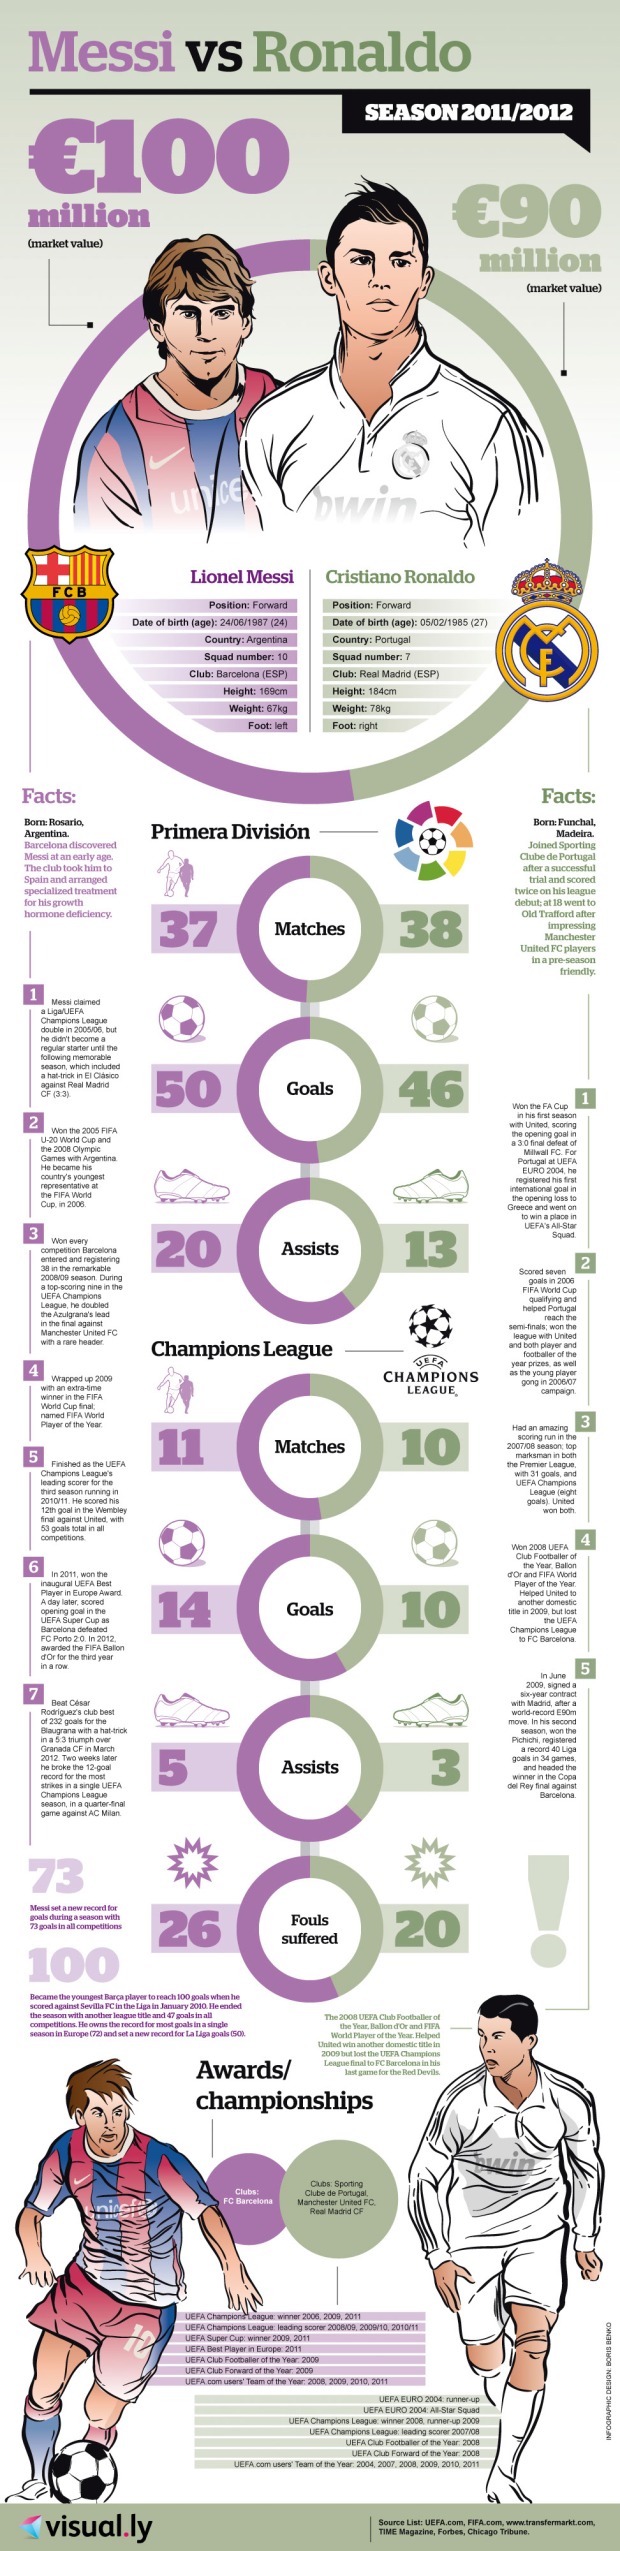 Messi Vs Ronaldo infographic